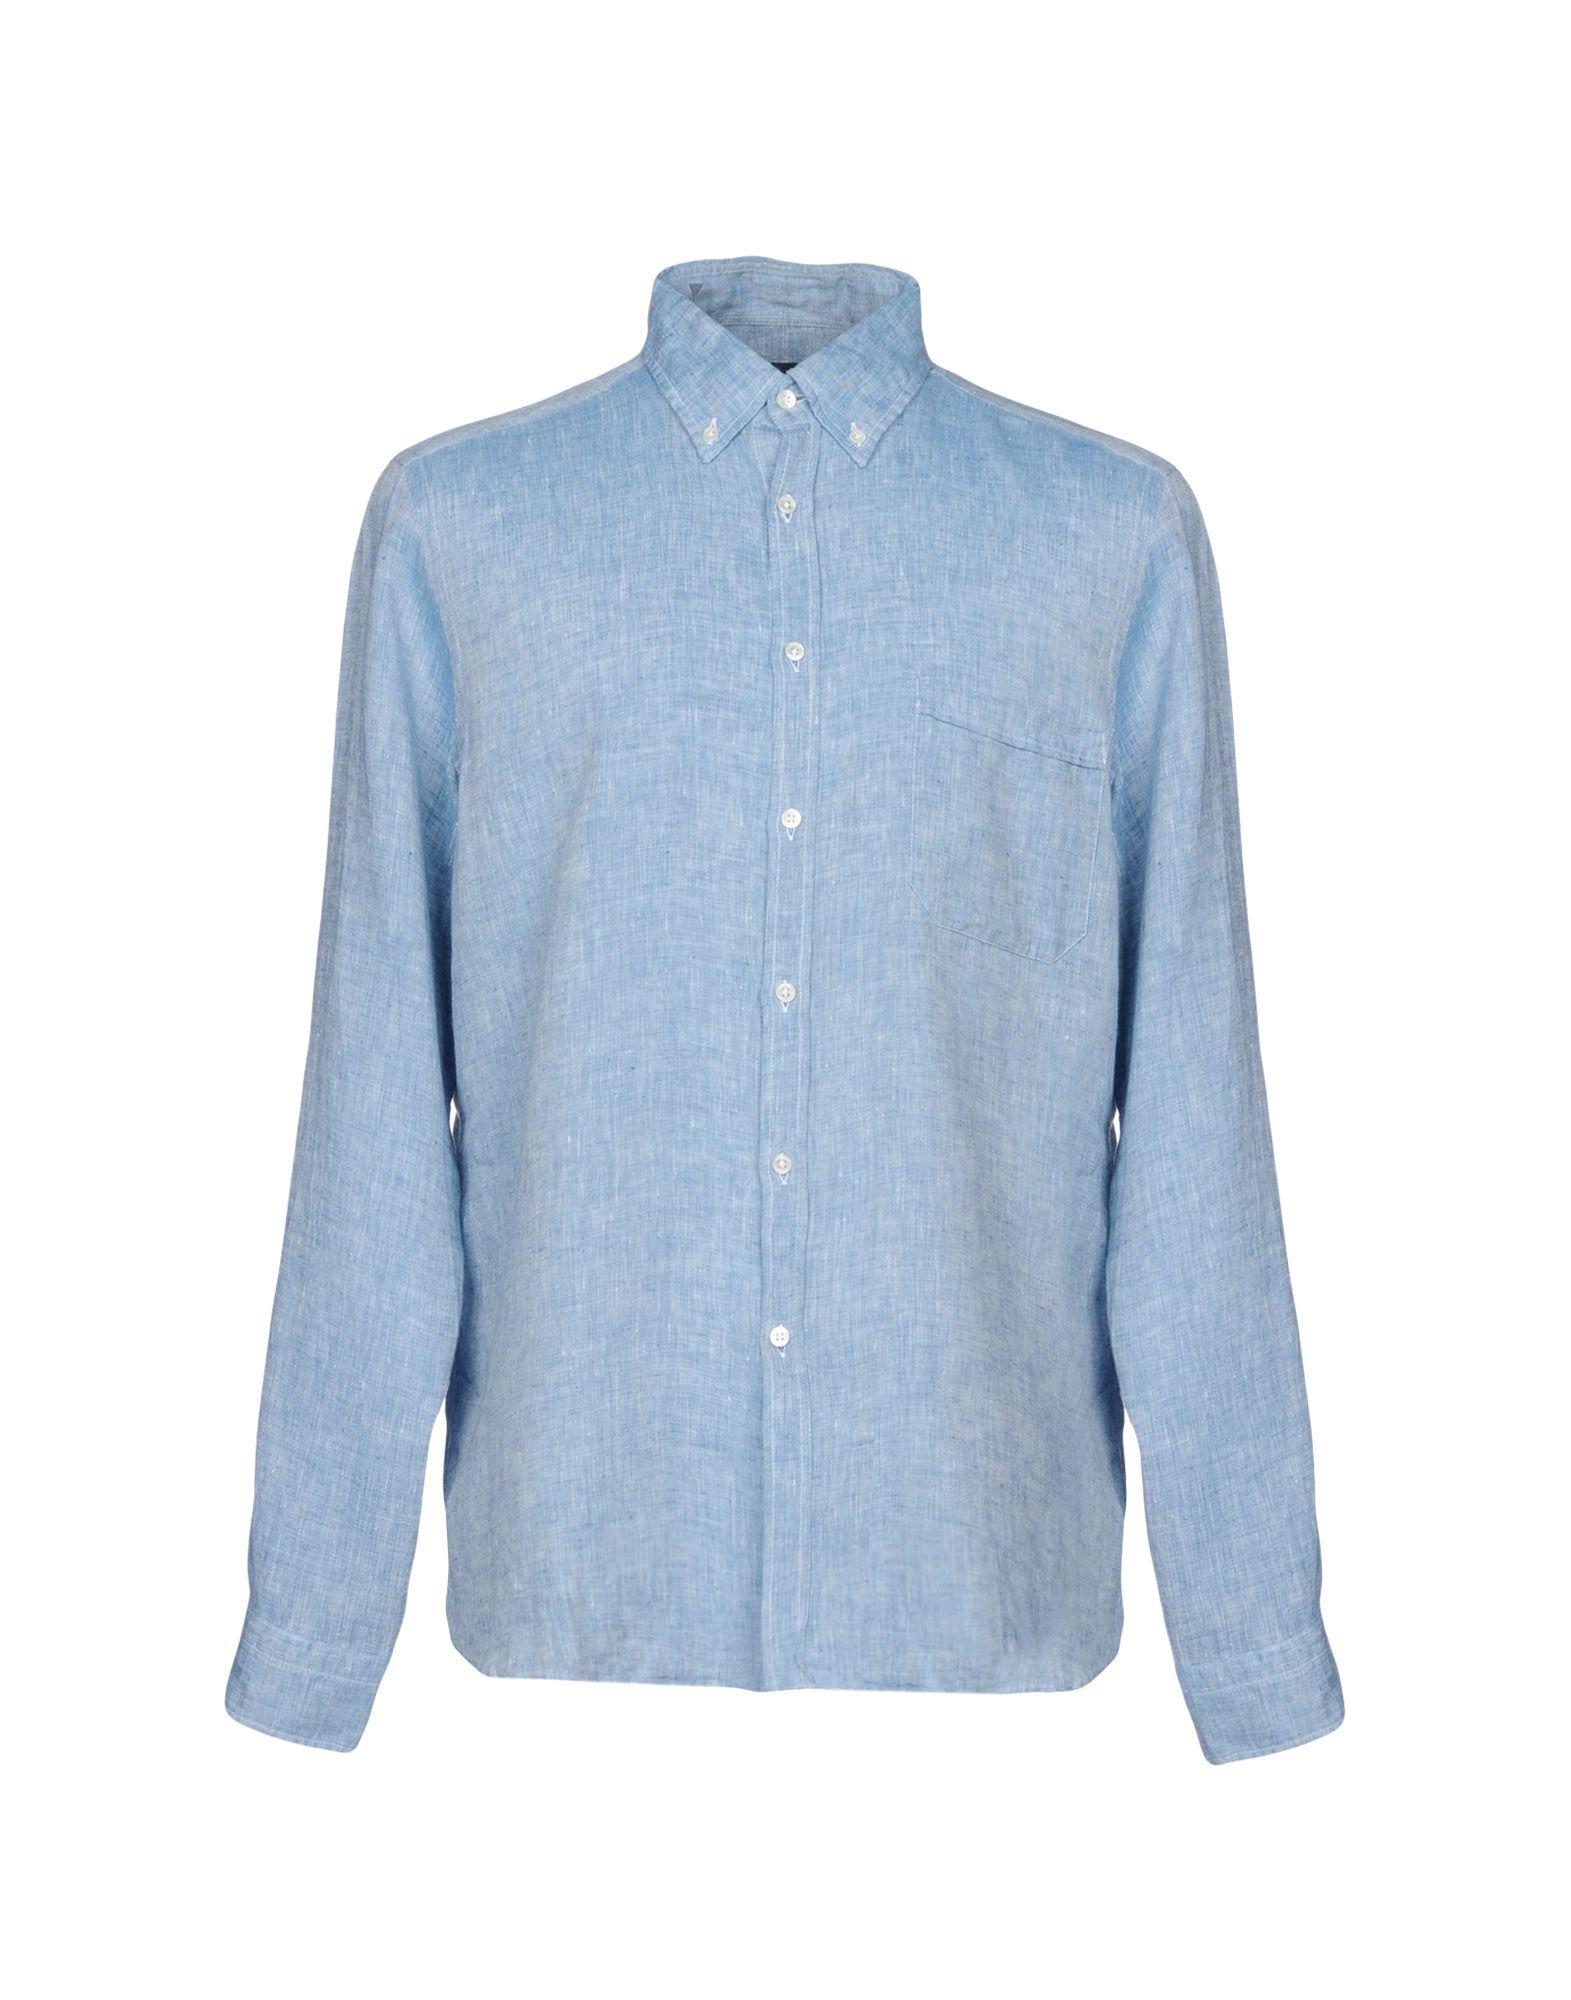 Tombolini Denim Shirt In Blue | ModeSens